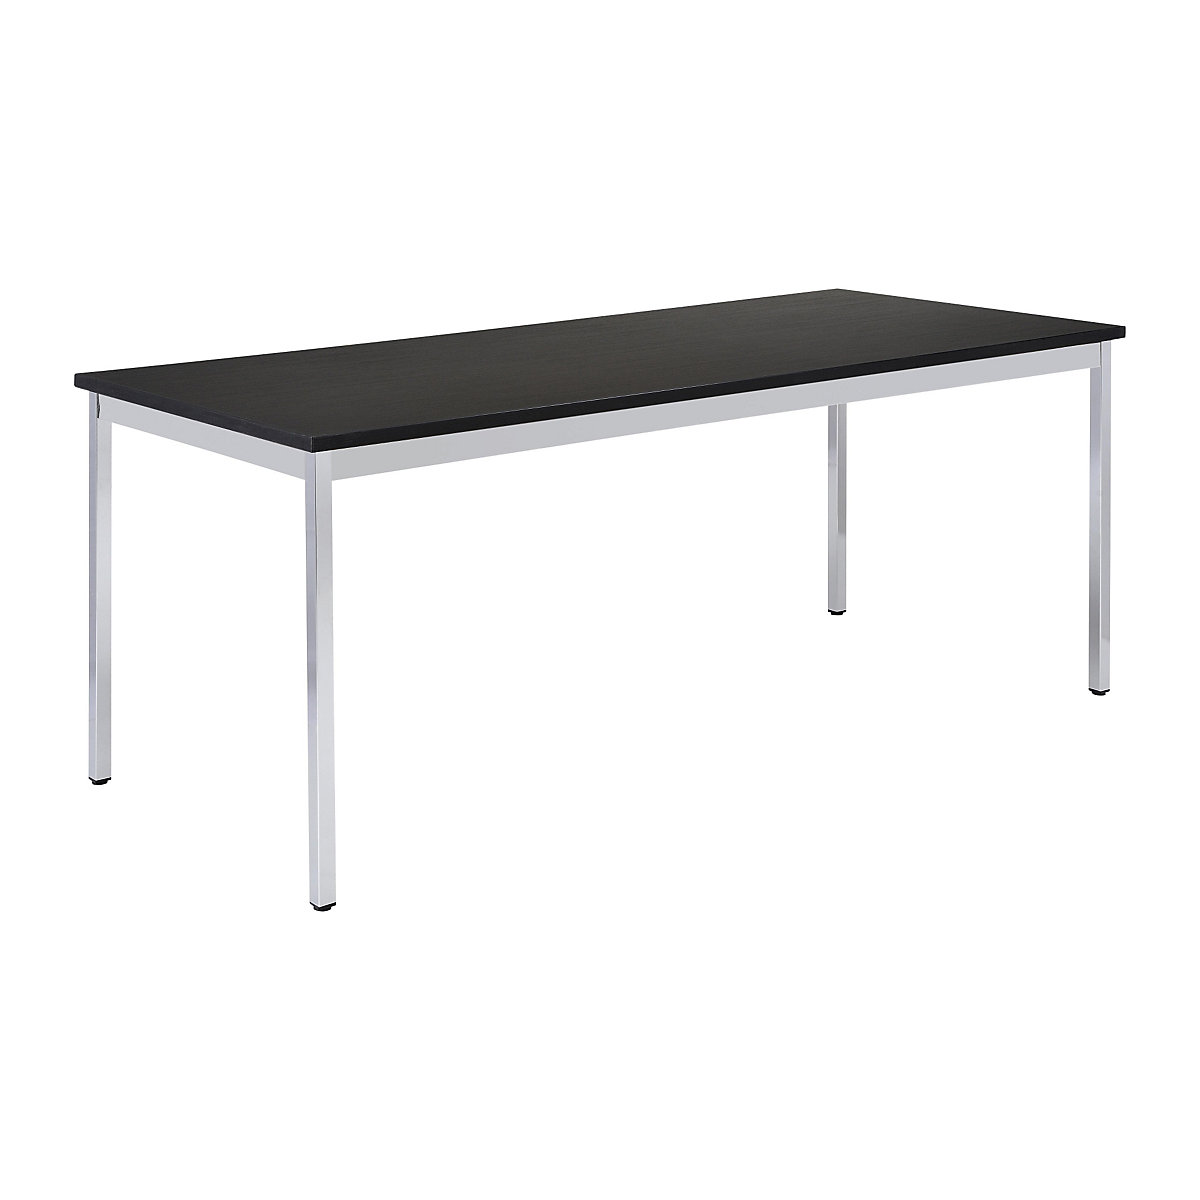 Universele tafel – eurokraft basic, rechthoekig, b x h = 1200 x 740 mm, diepte 800 mm, blad zwart, frame verchroomd